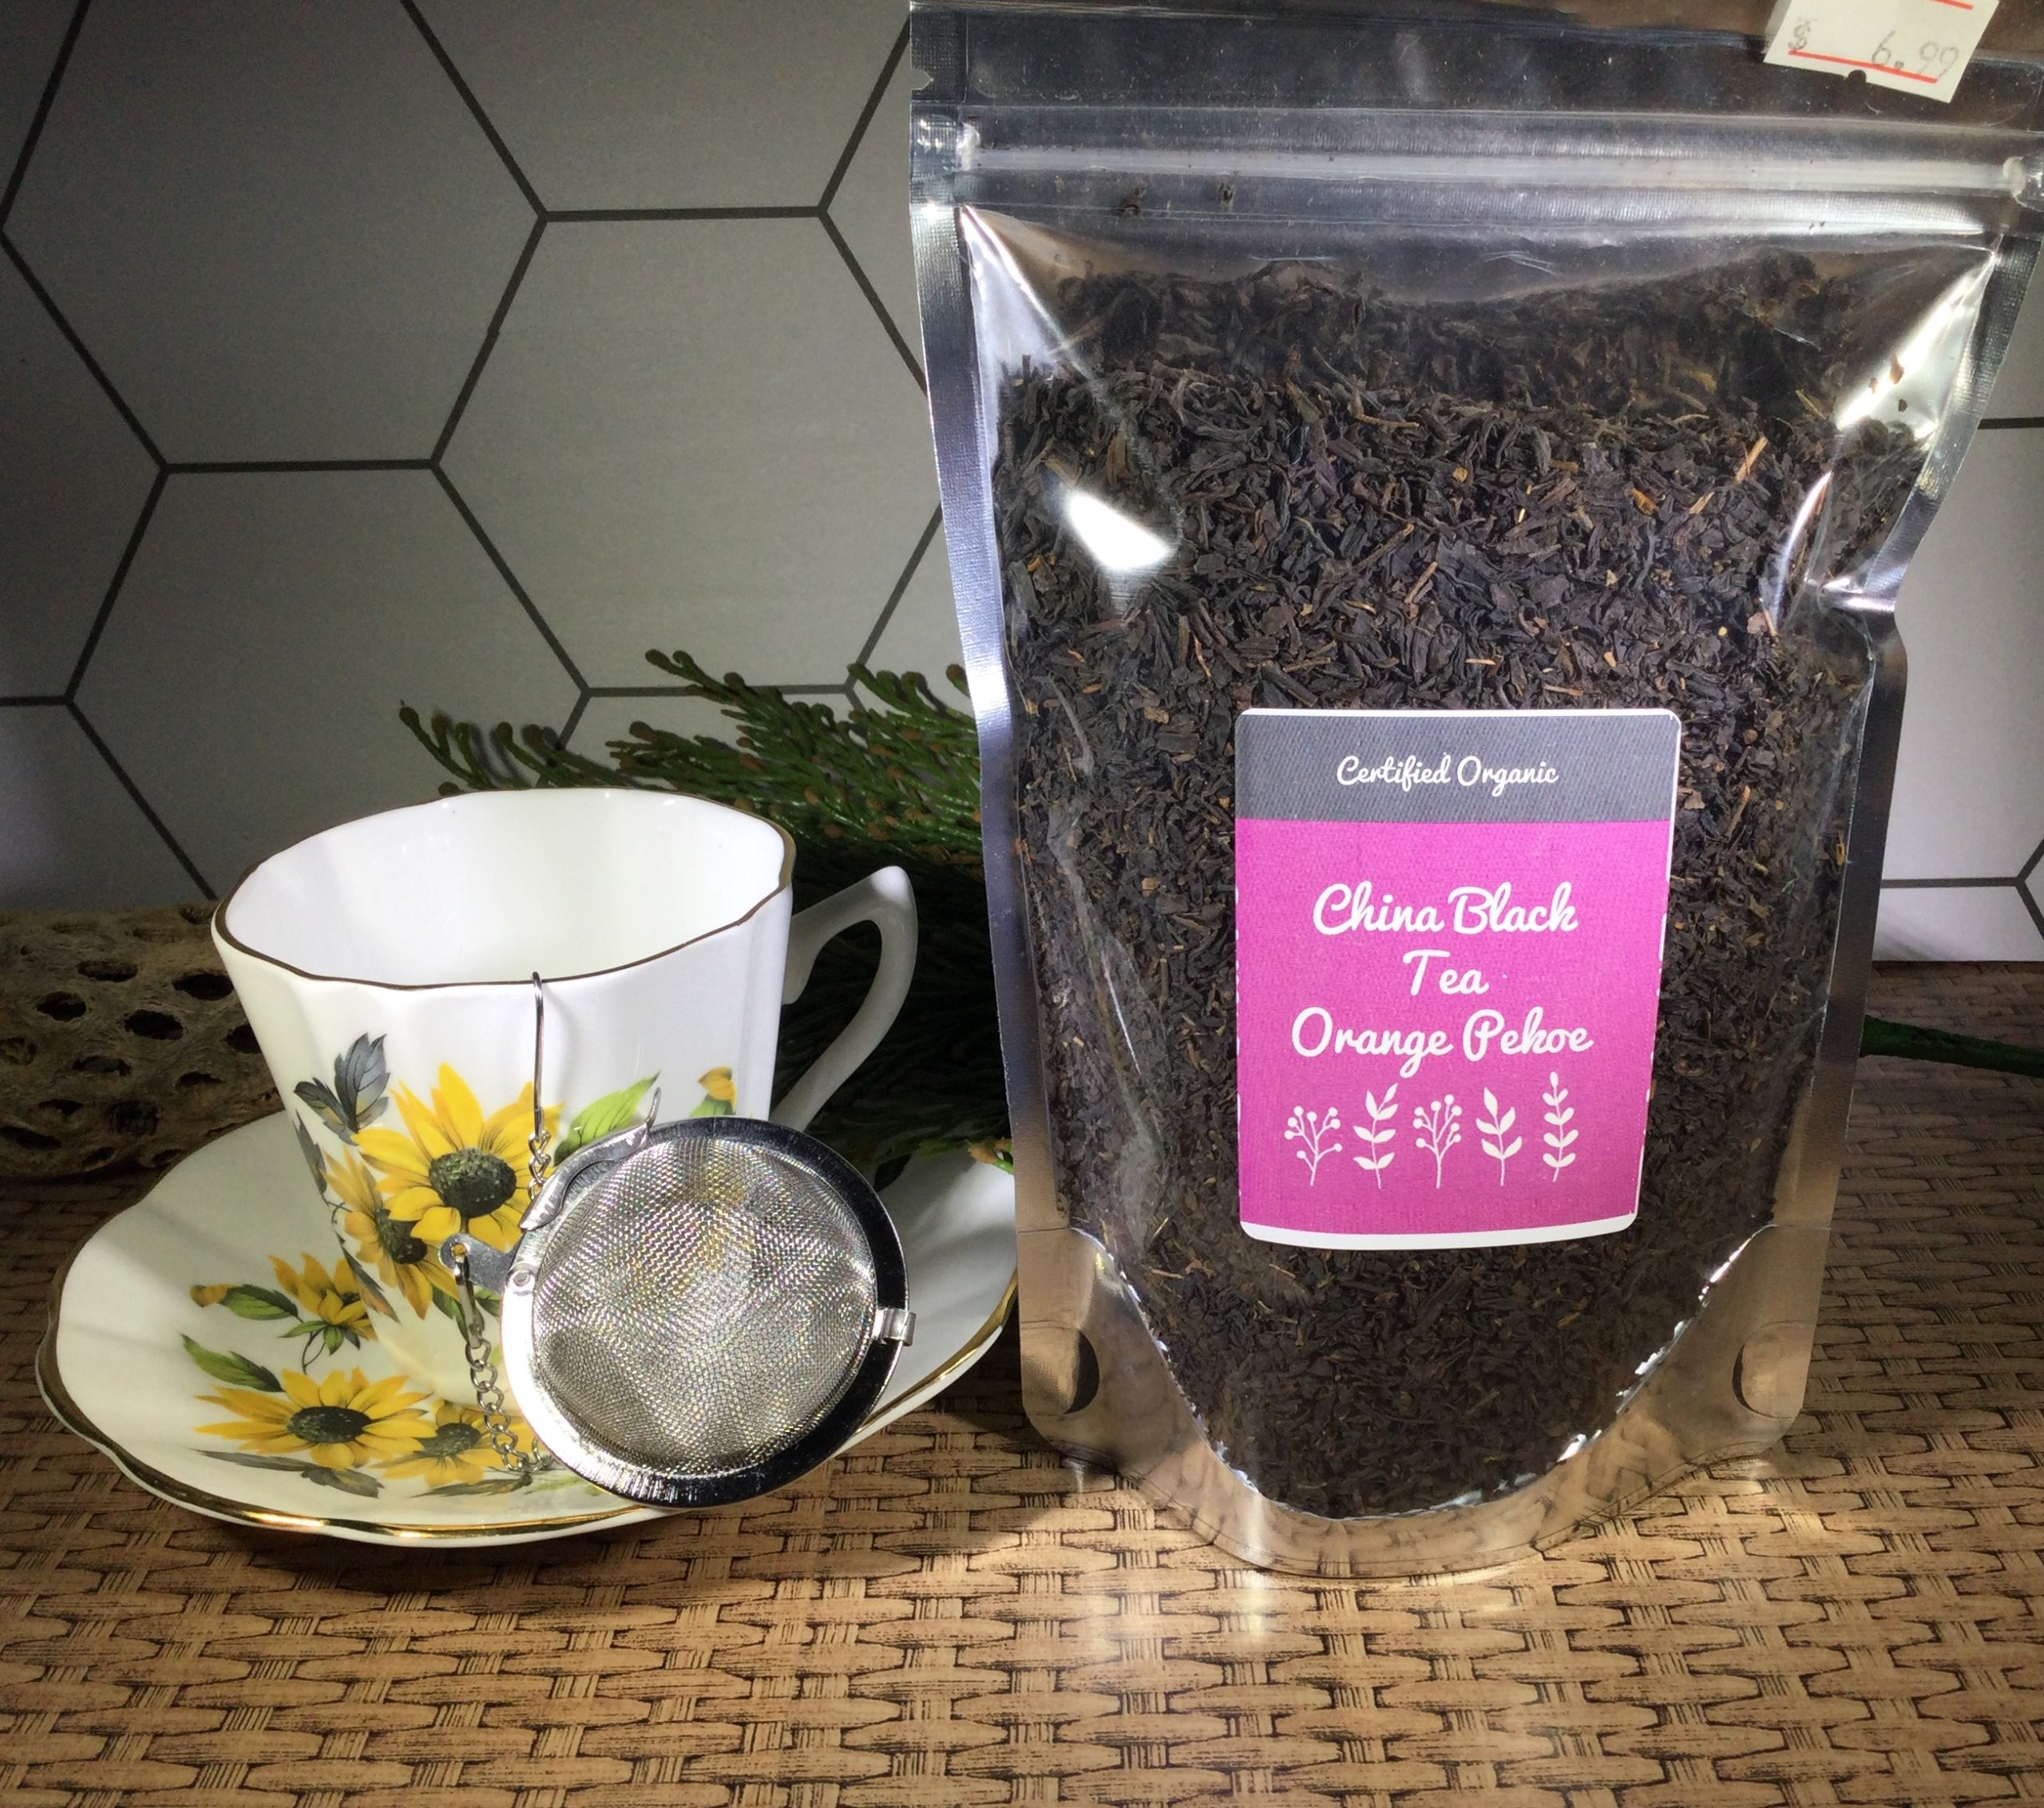 Tea - China Black (Orange Pekoe), Organic, 4 oz. - Poppy's Wildcraft, LLC